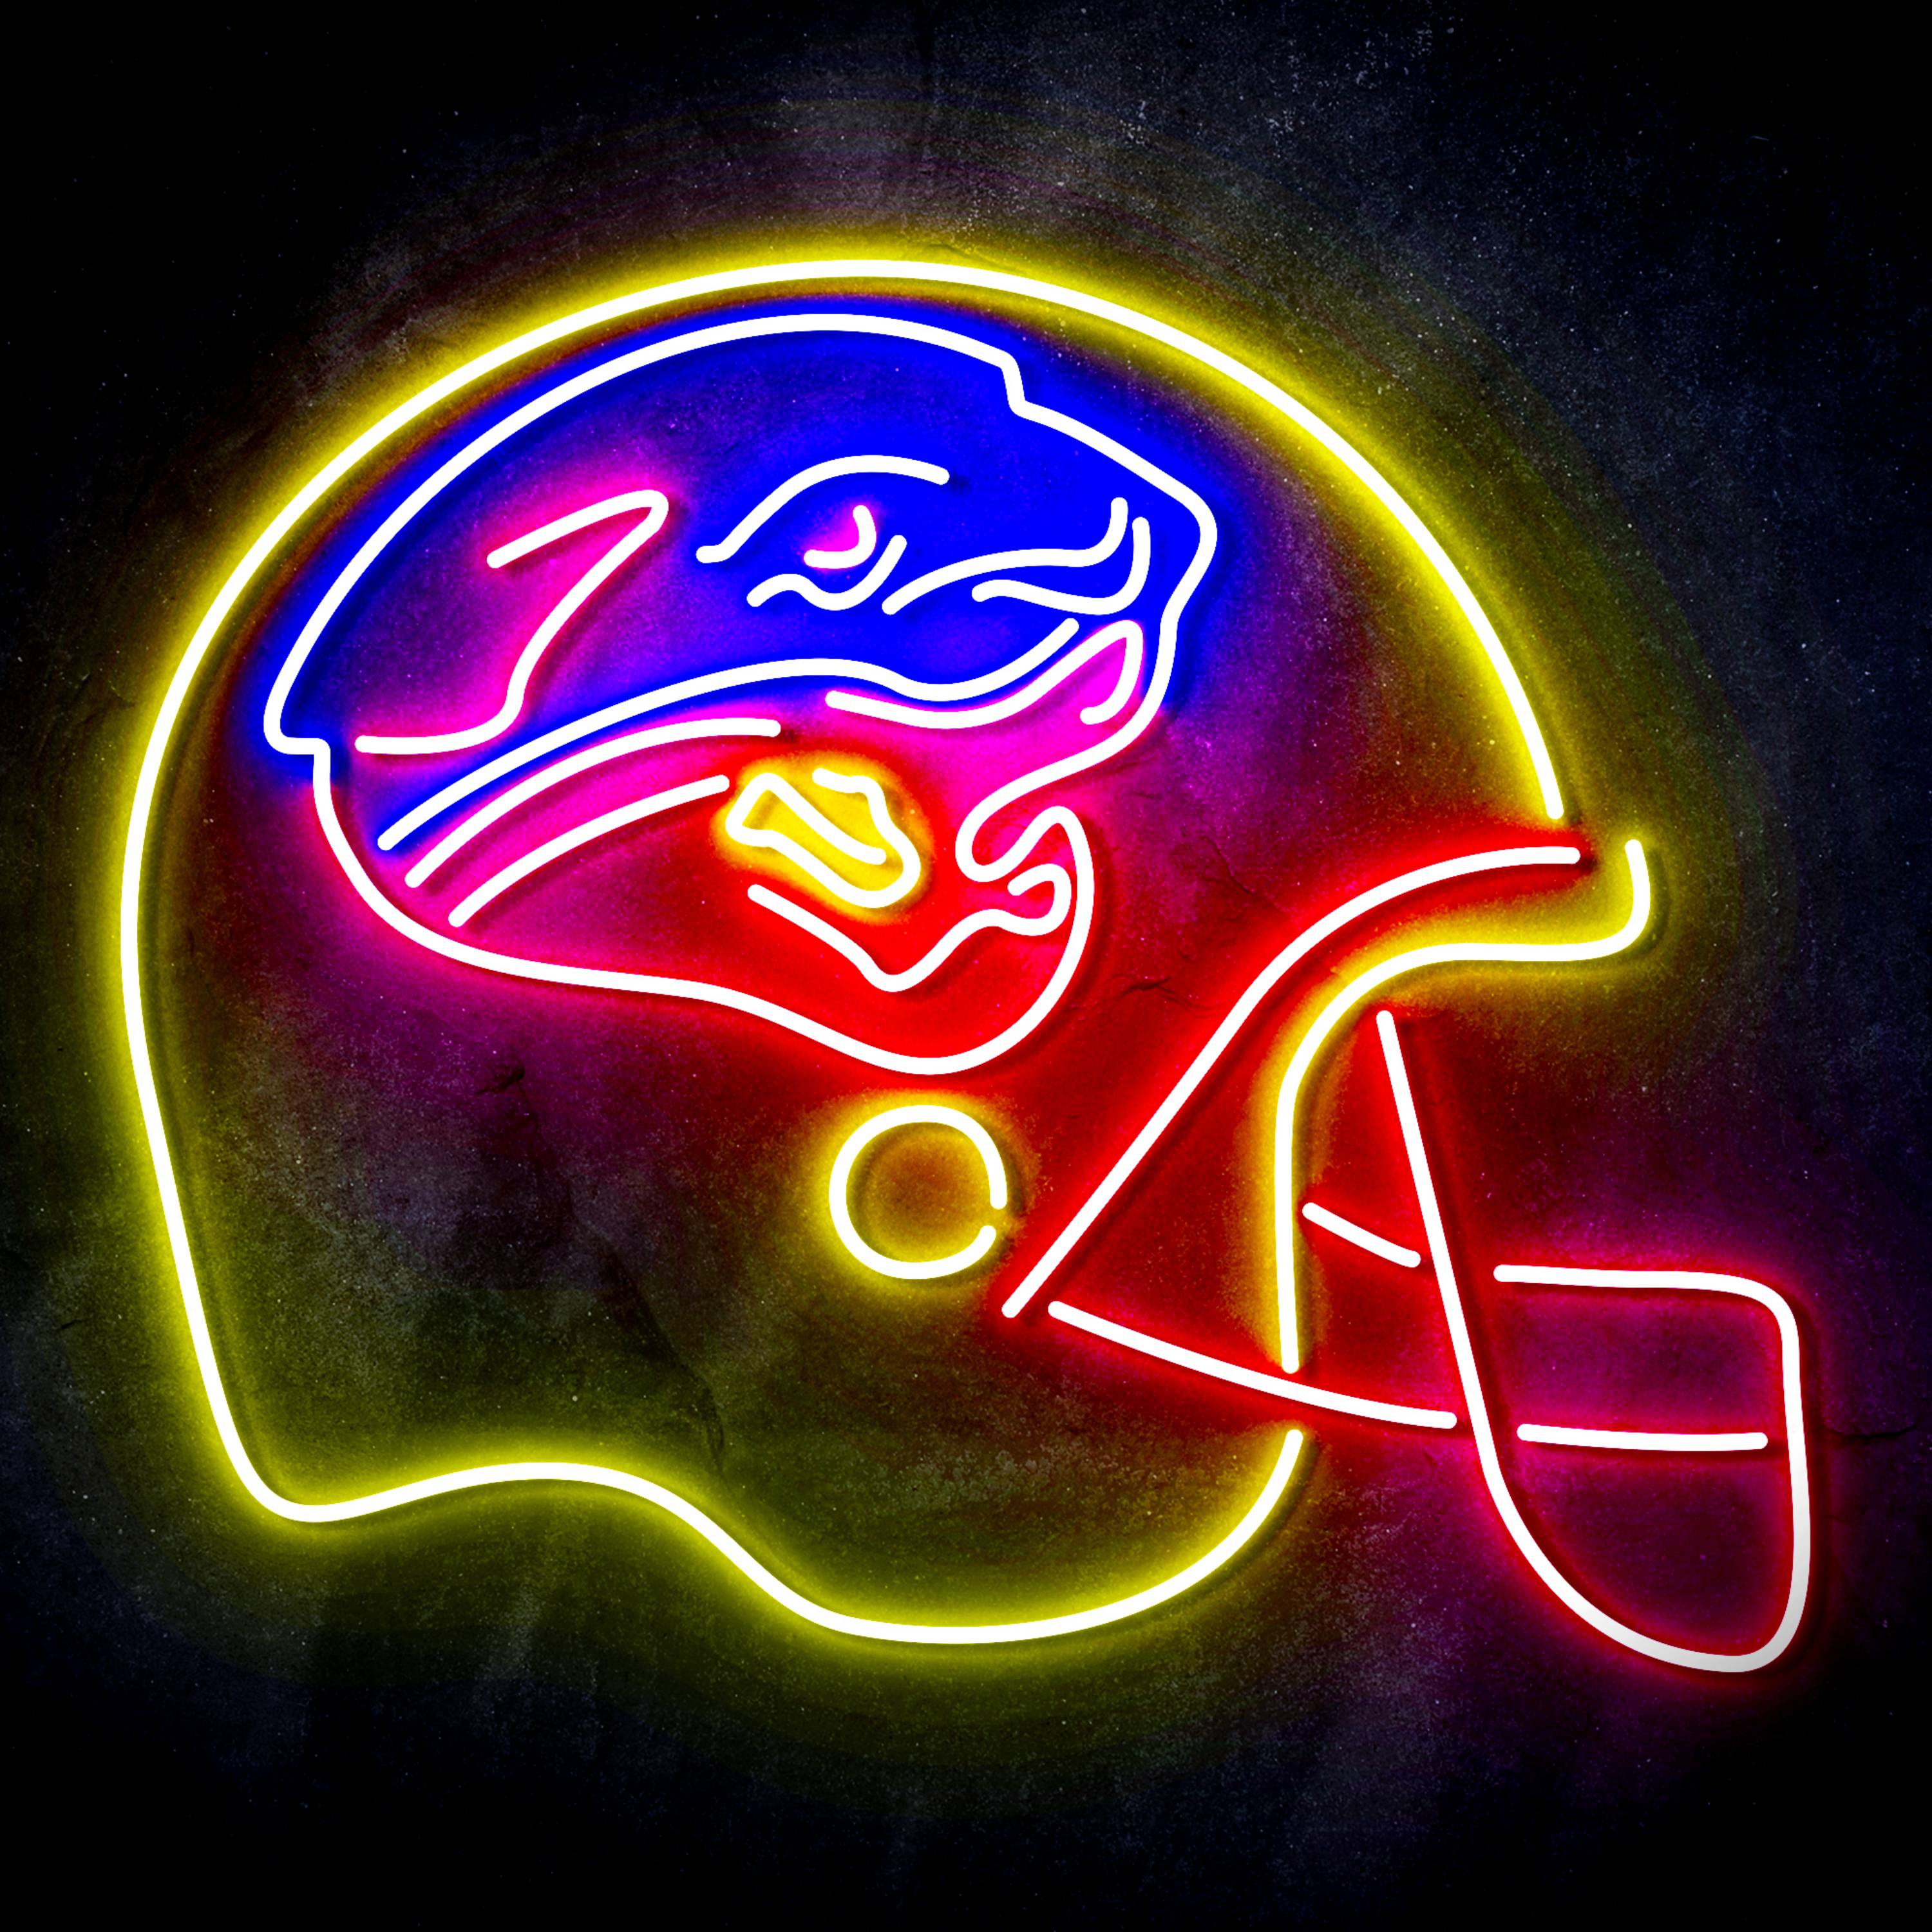 NFL Helmet Jacksonville Jaguars LED Neon Sign